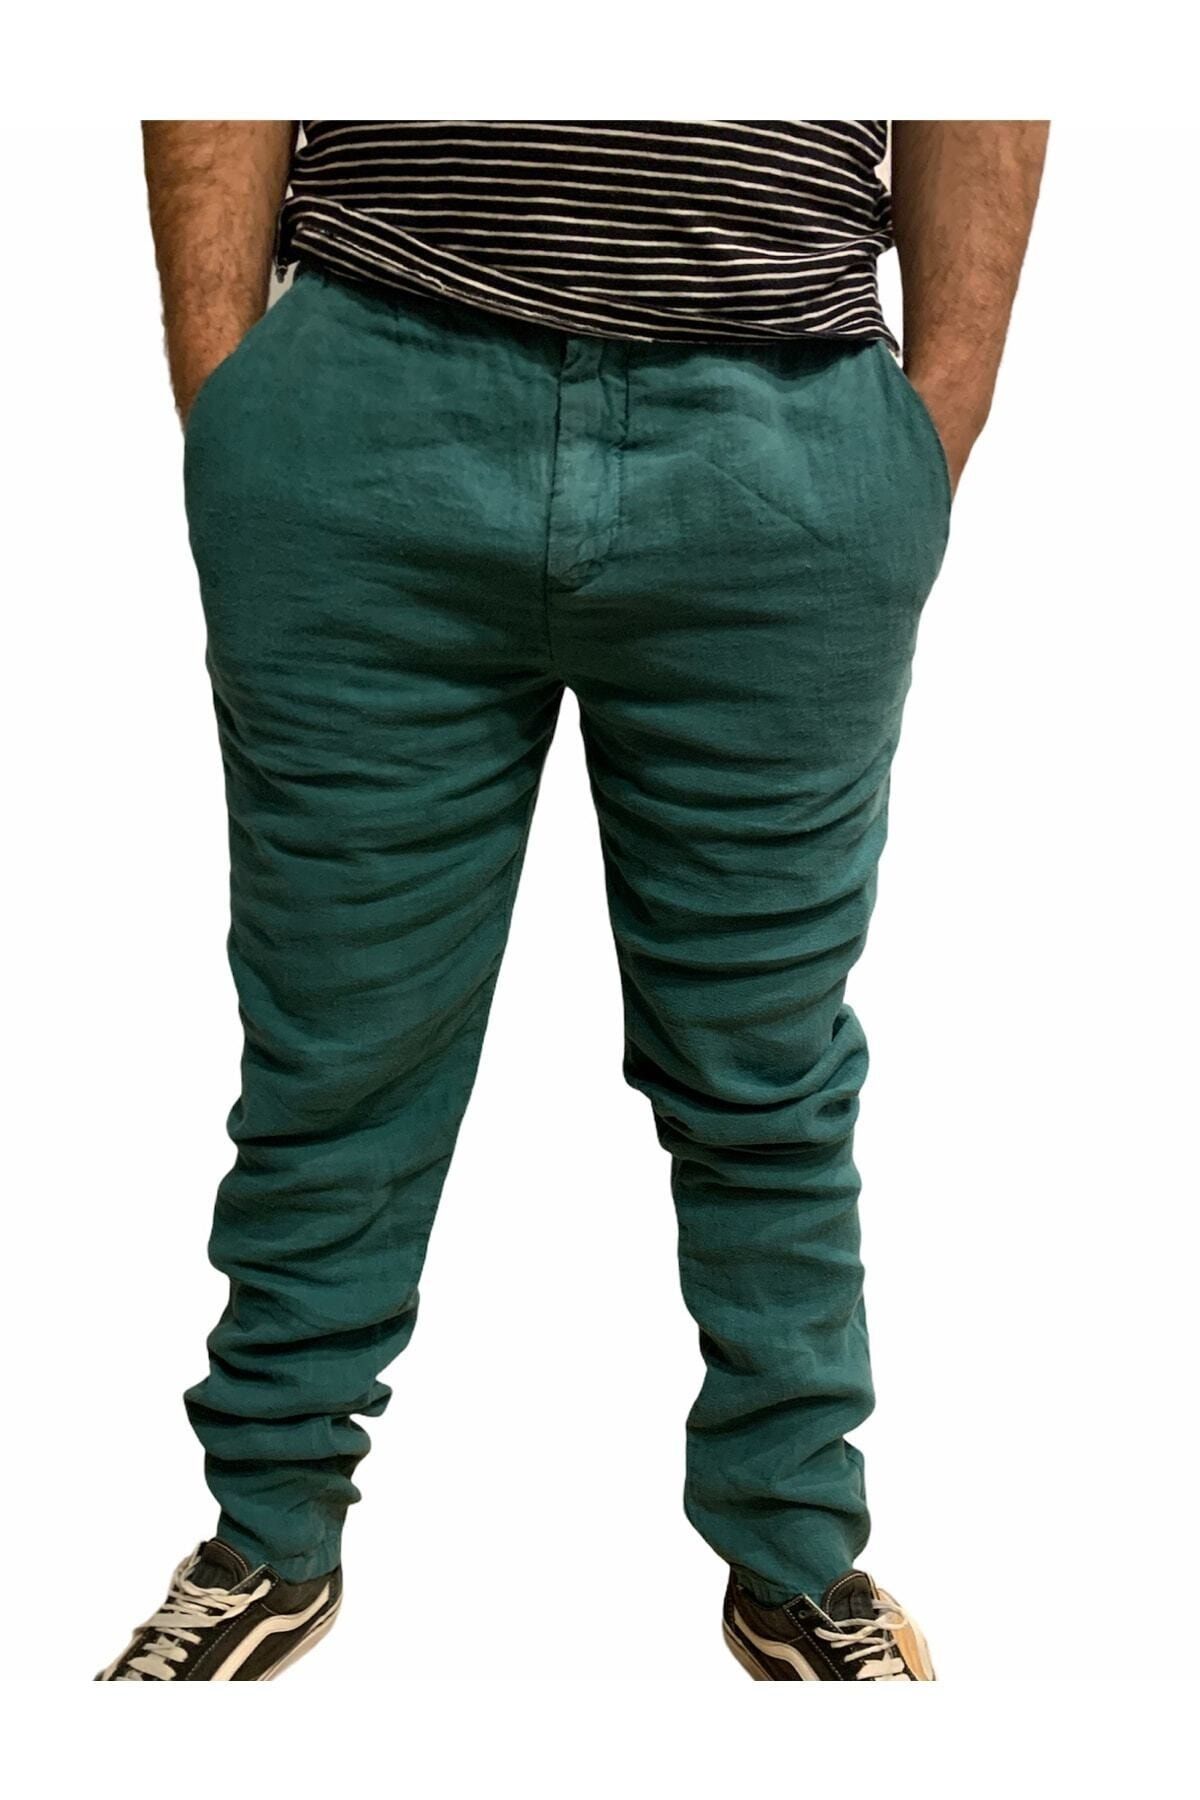 Superfly Linen Pantolon Erkek Yeşil Eşofman Altı 20805-21